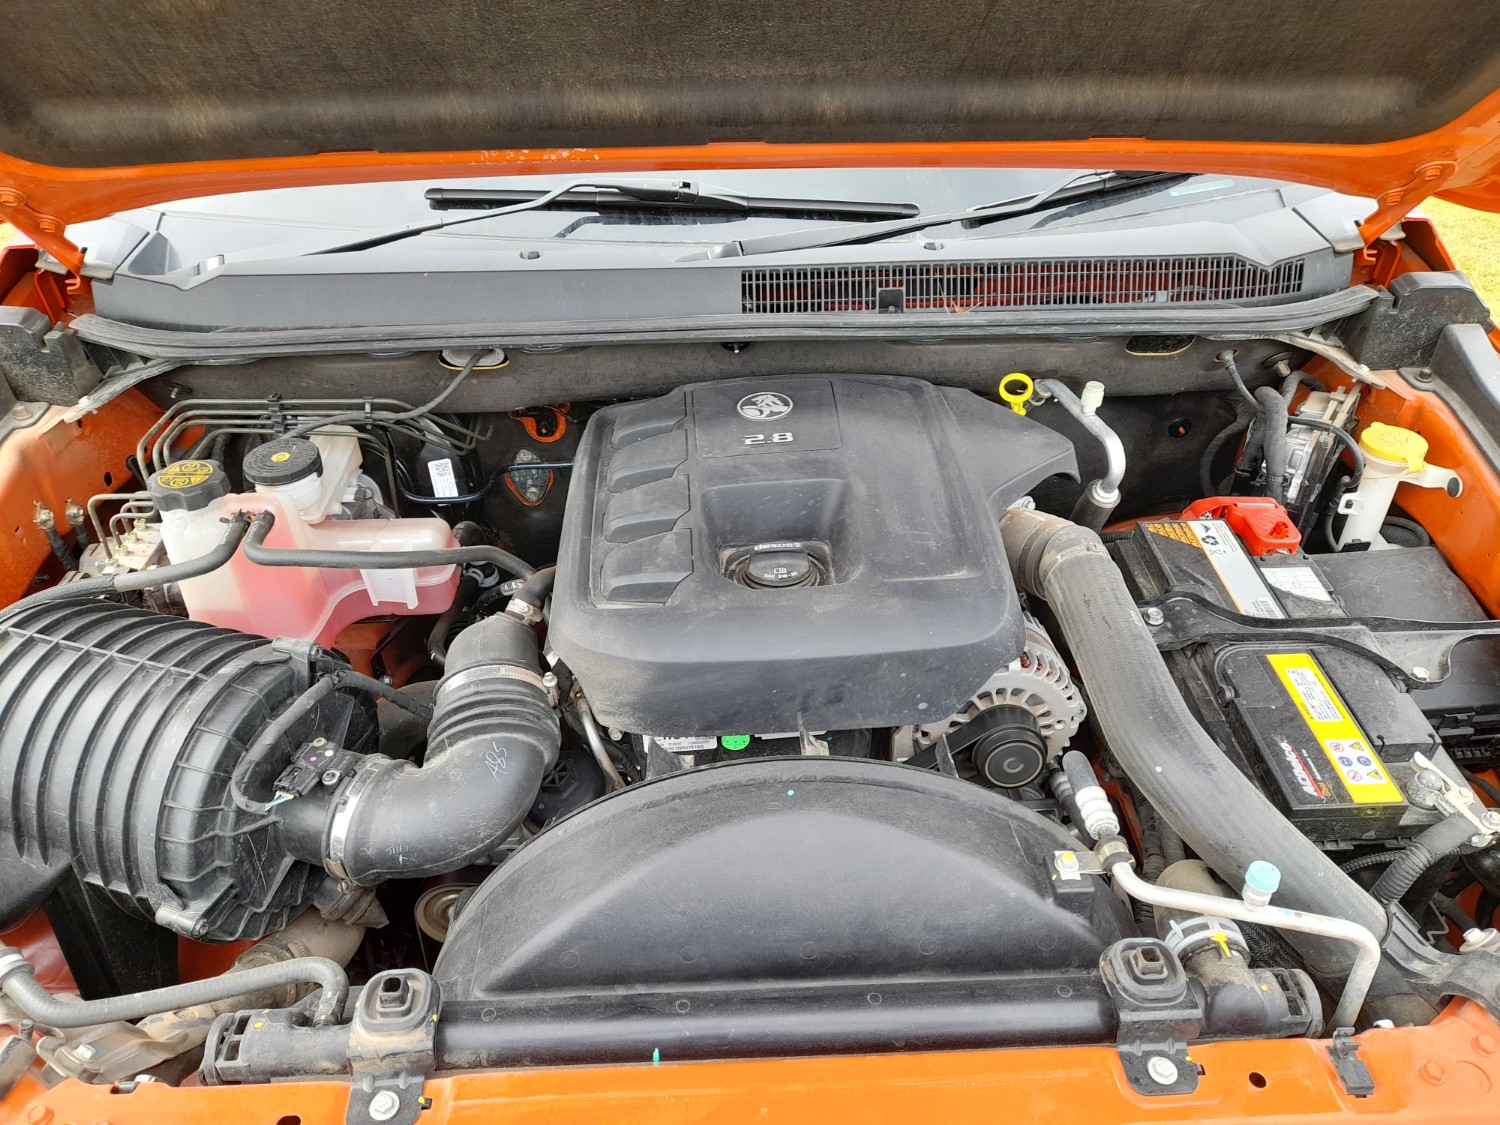 2018 MY19 Holden Colorado RG Turbo Z71 Xtreme Ute Image 26